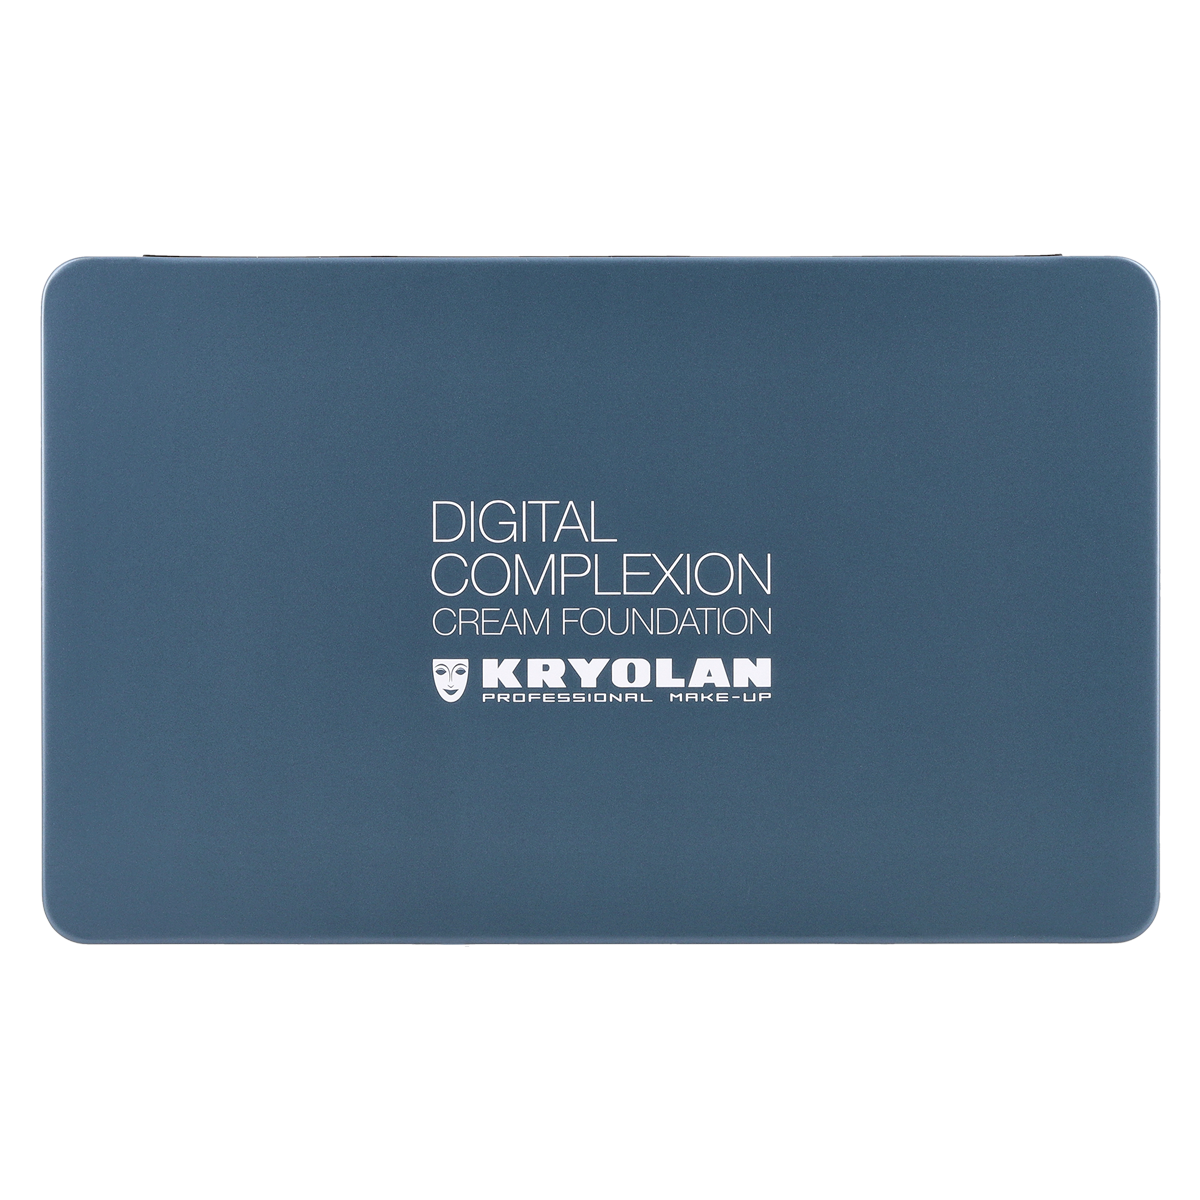 Digital 1 Complexion Cream Foundation